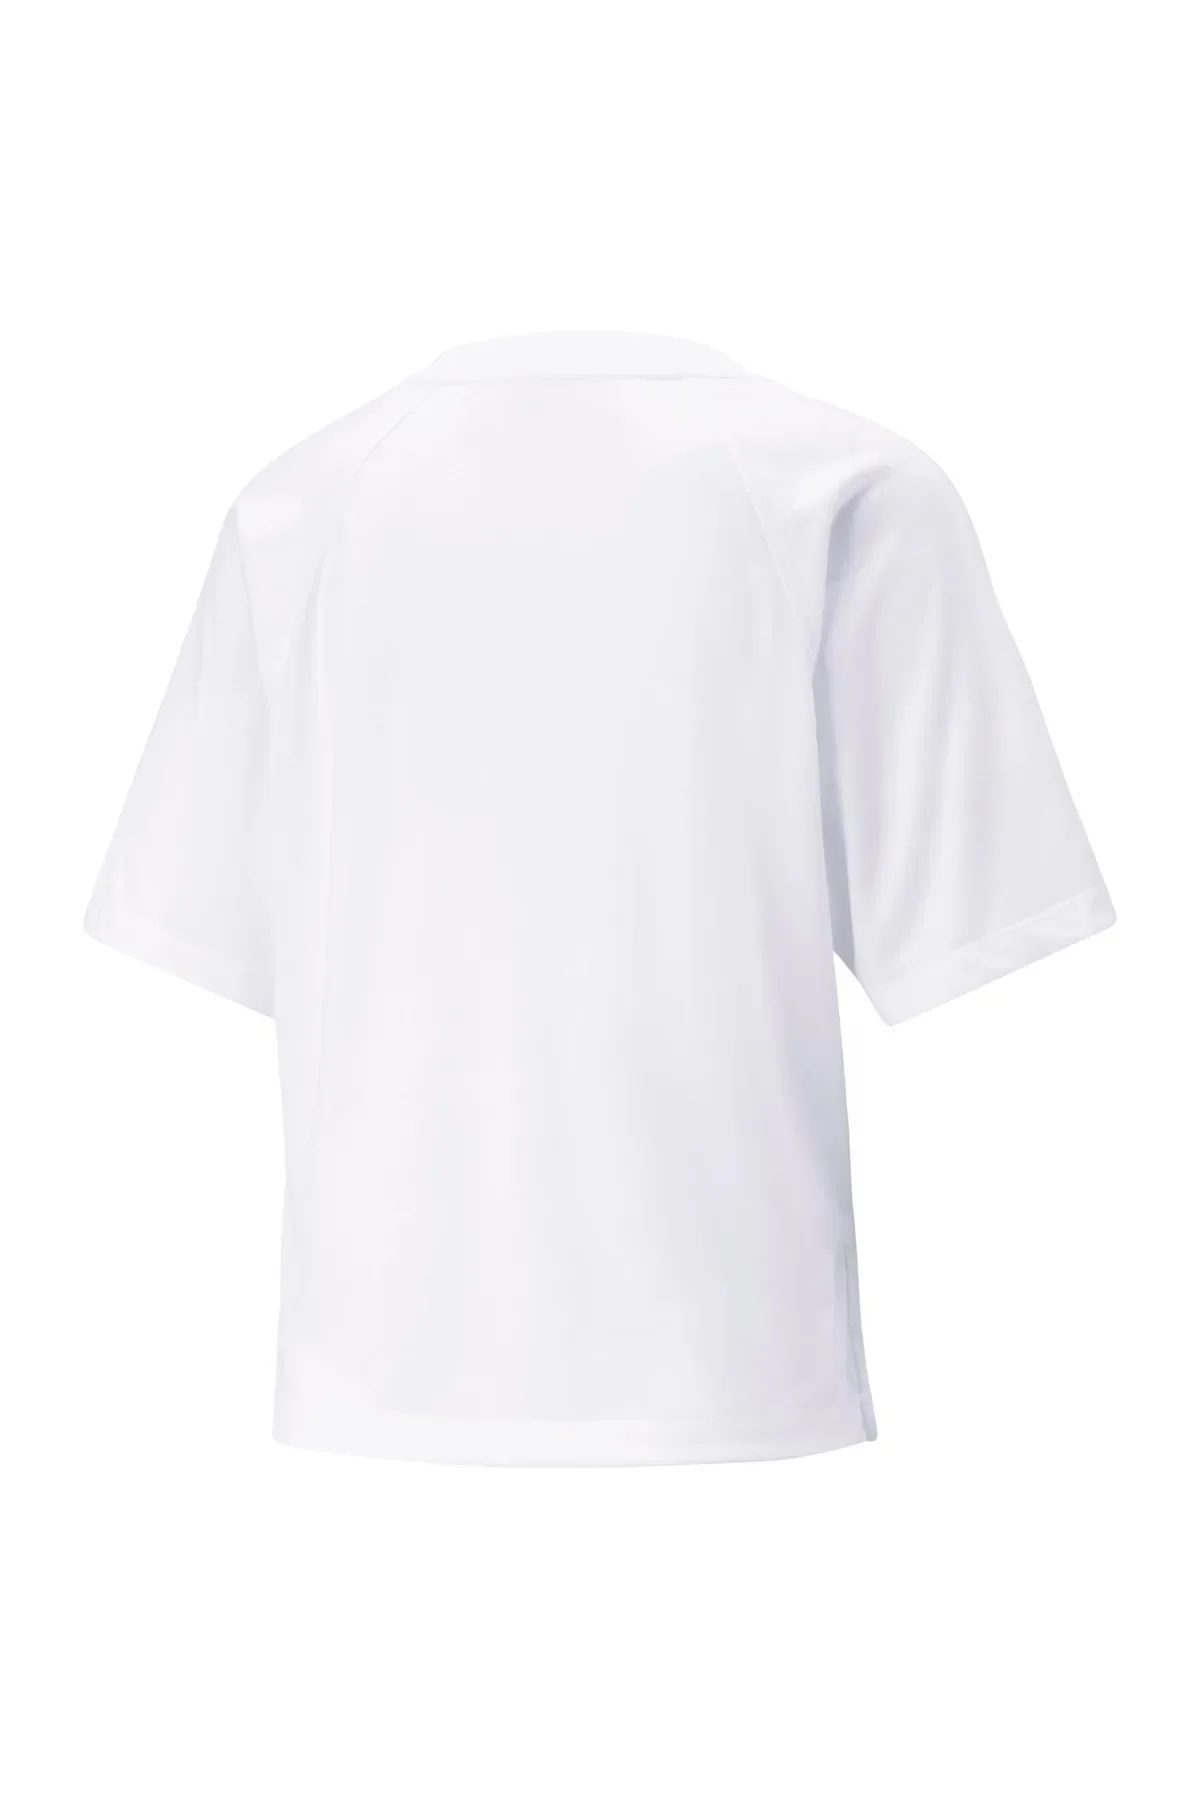 Modern Sports Tee Kadın T-shirt 673095-Beyaz - 5